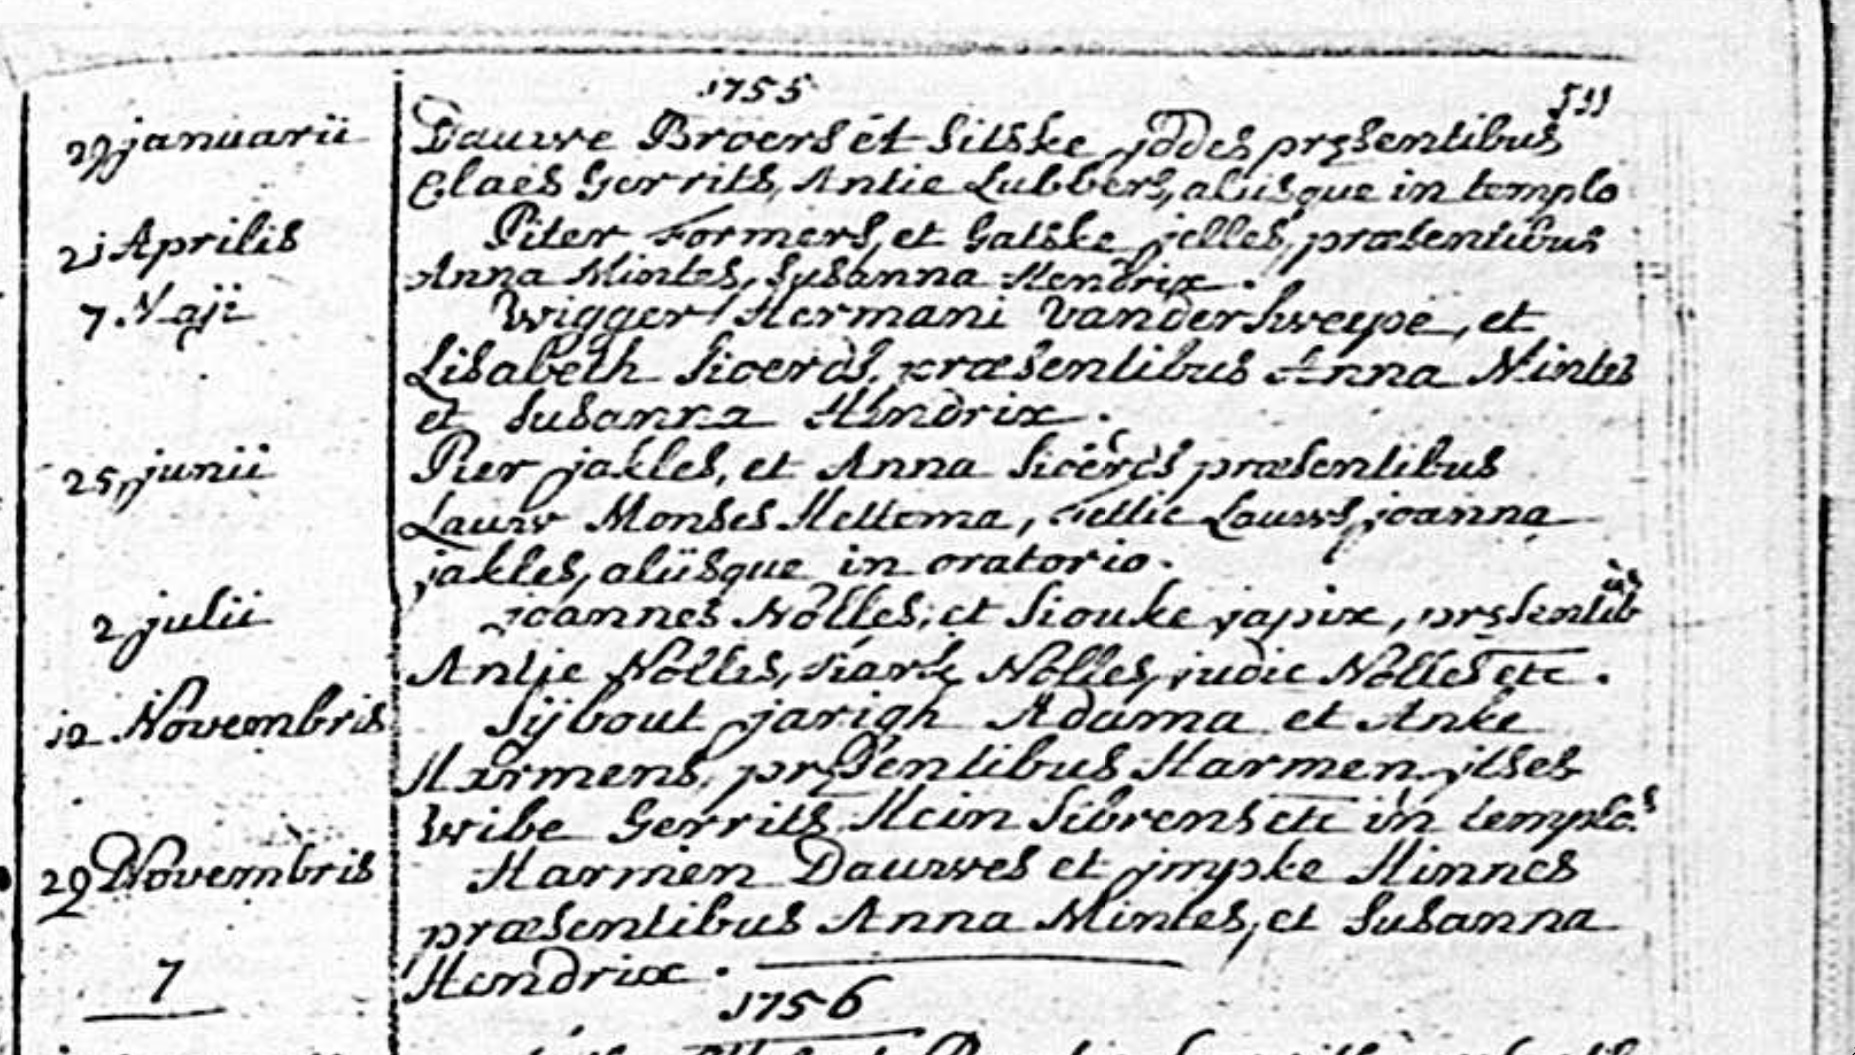 ’<I>Harmen Dauwes et impke Hinnes presentibus Anna Mintes, et Susanna Hendrix</I>’, Bolward 1755.